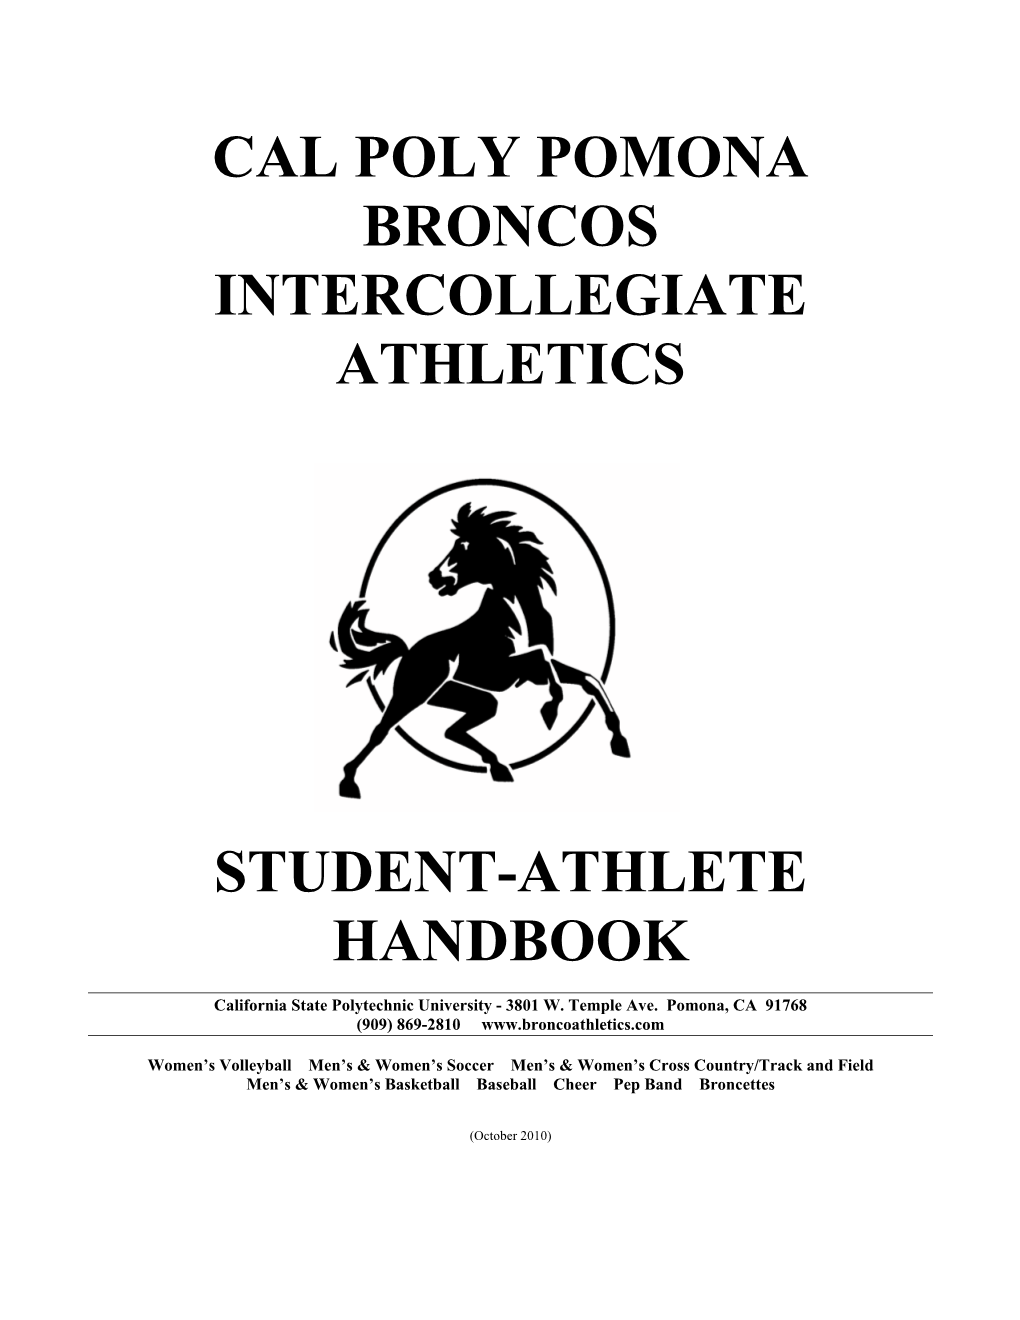 Cal Poly Pomona Broncos Intercollegiate Athletics